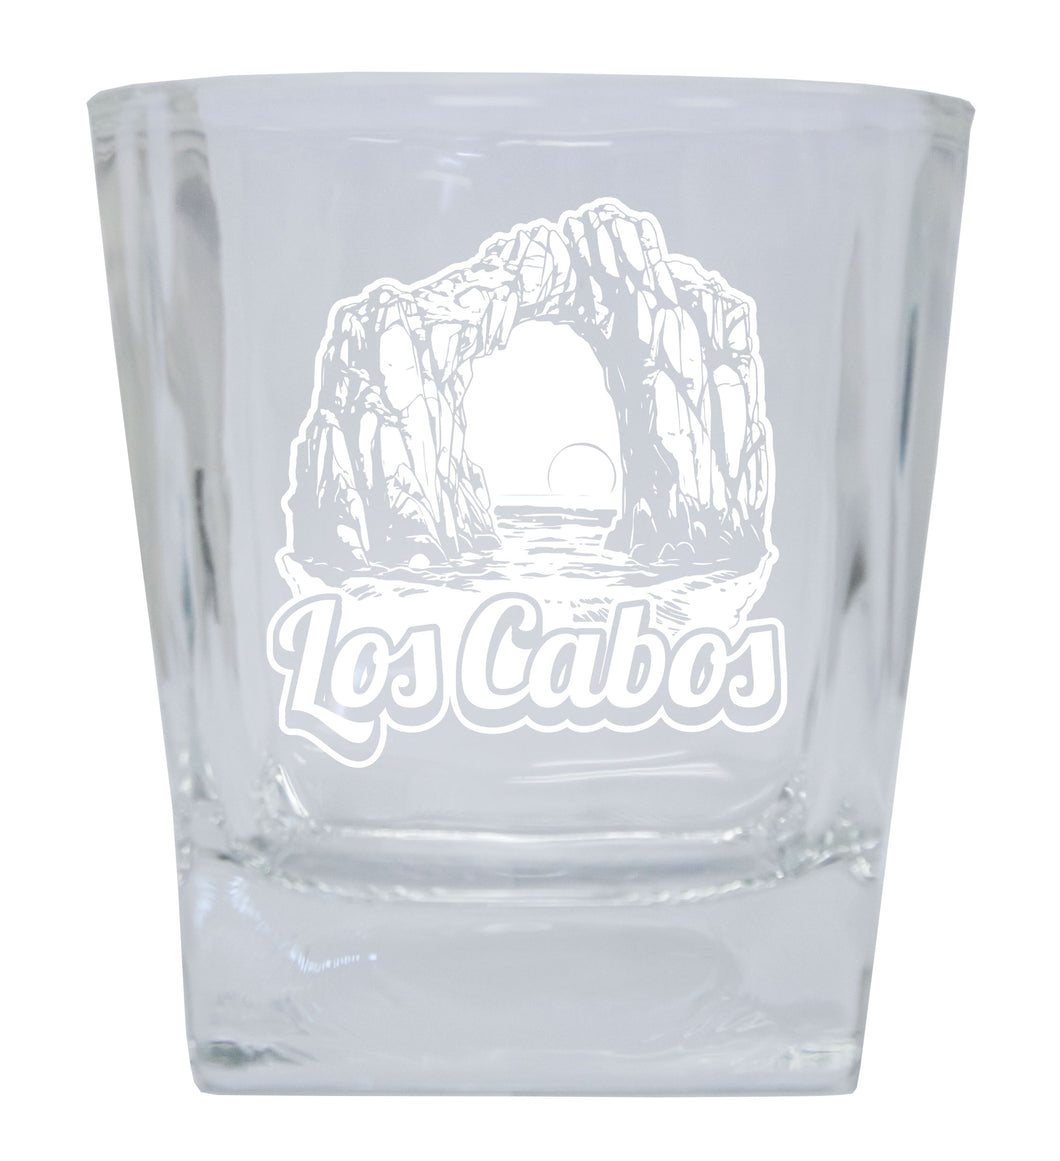 Los Cabos Mexico Souvenir 8oz Engraved Whiskey Glass Rocks Glass